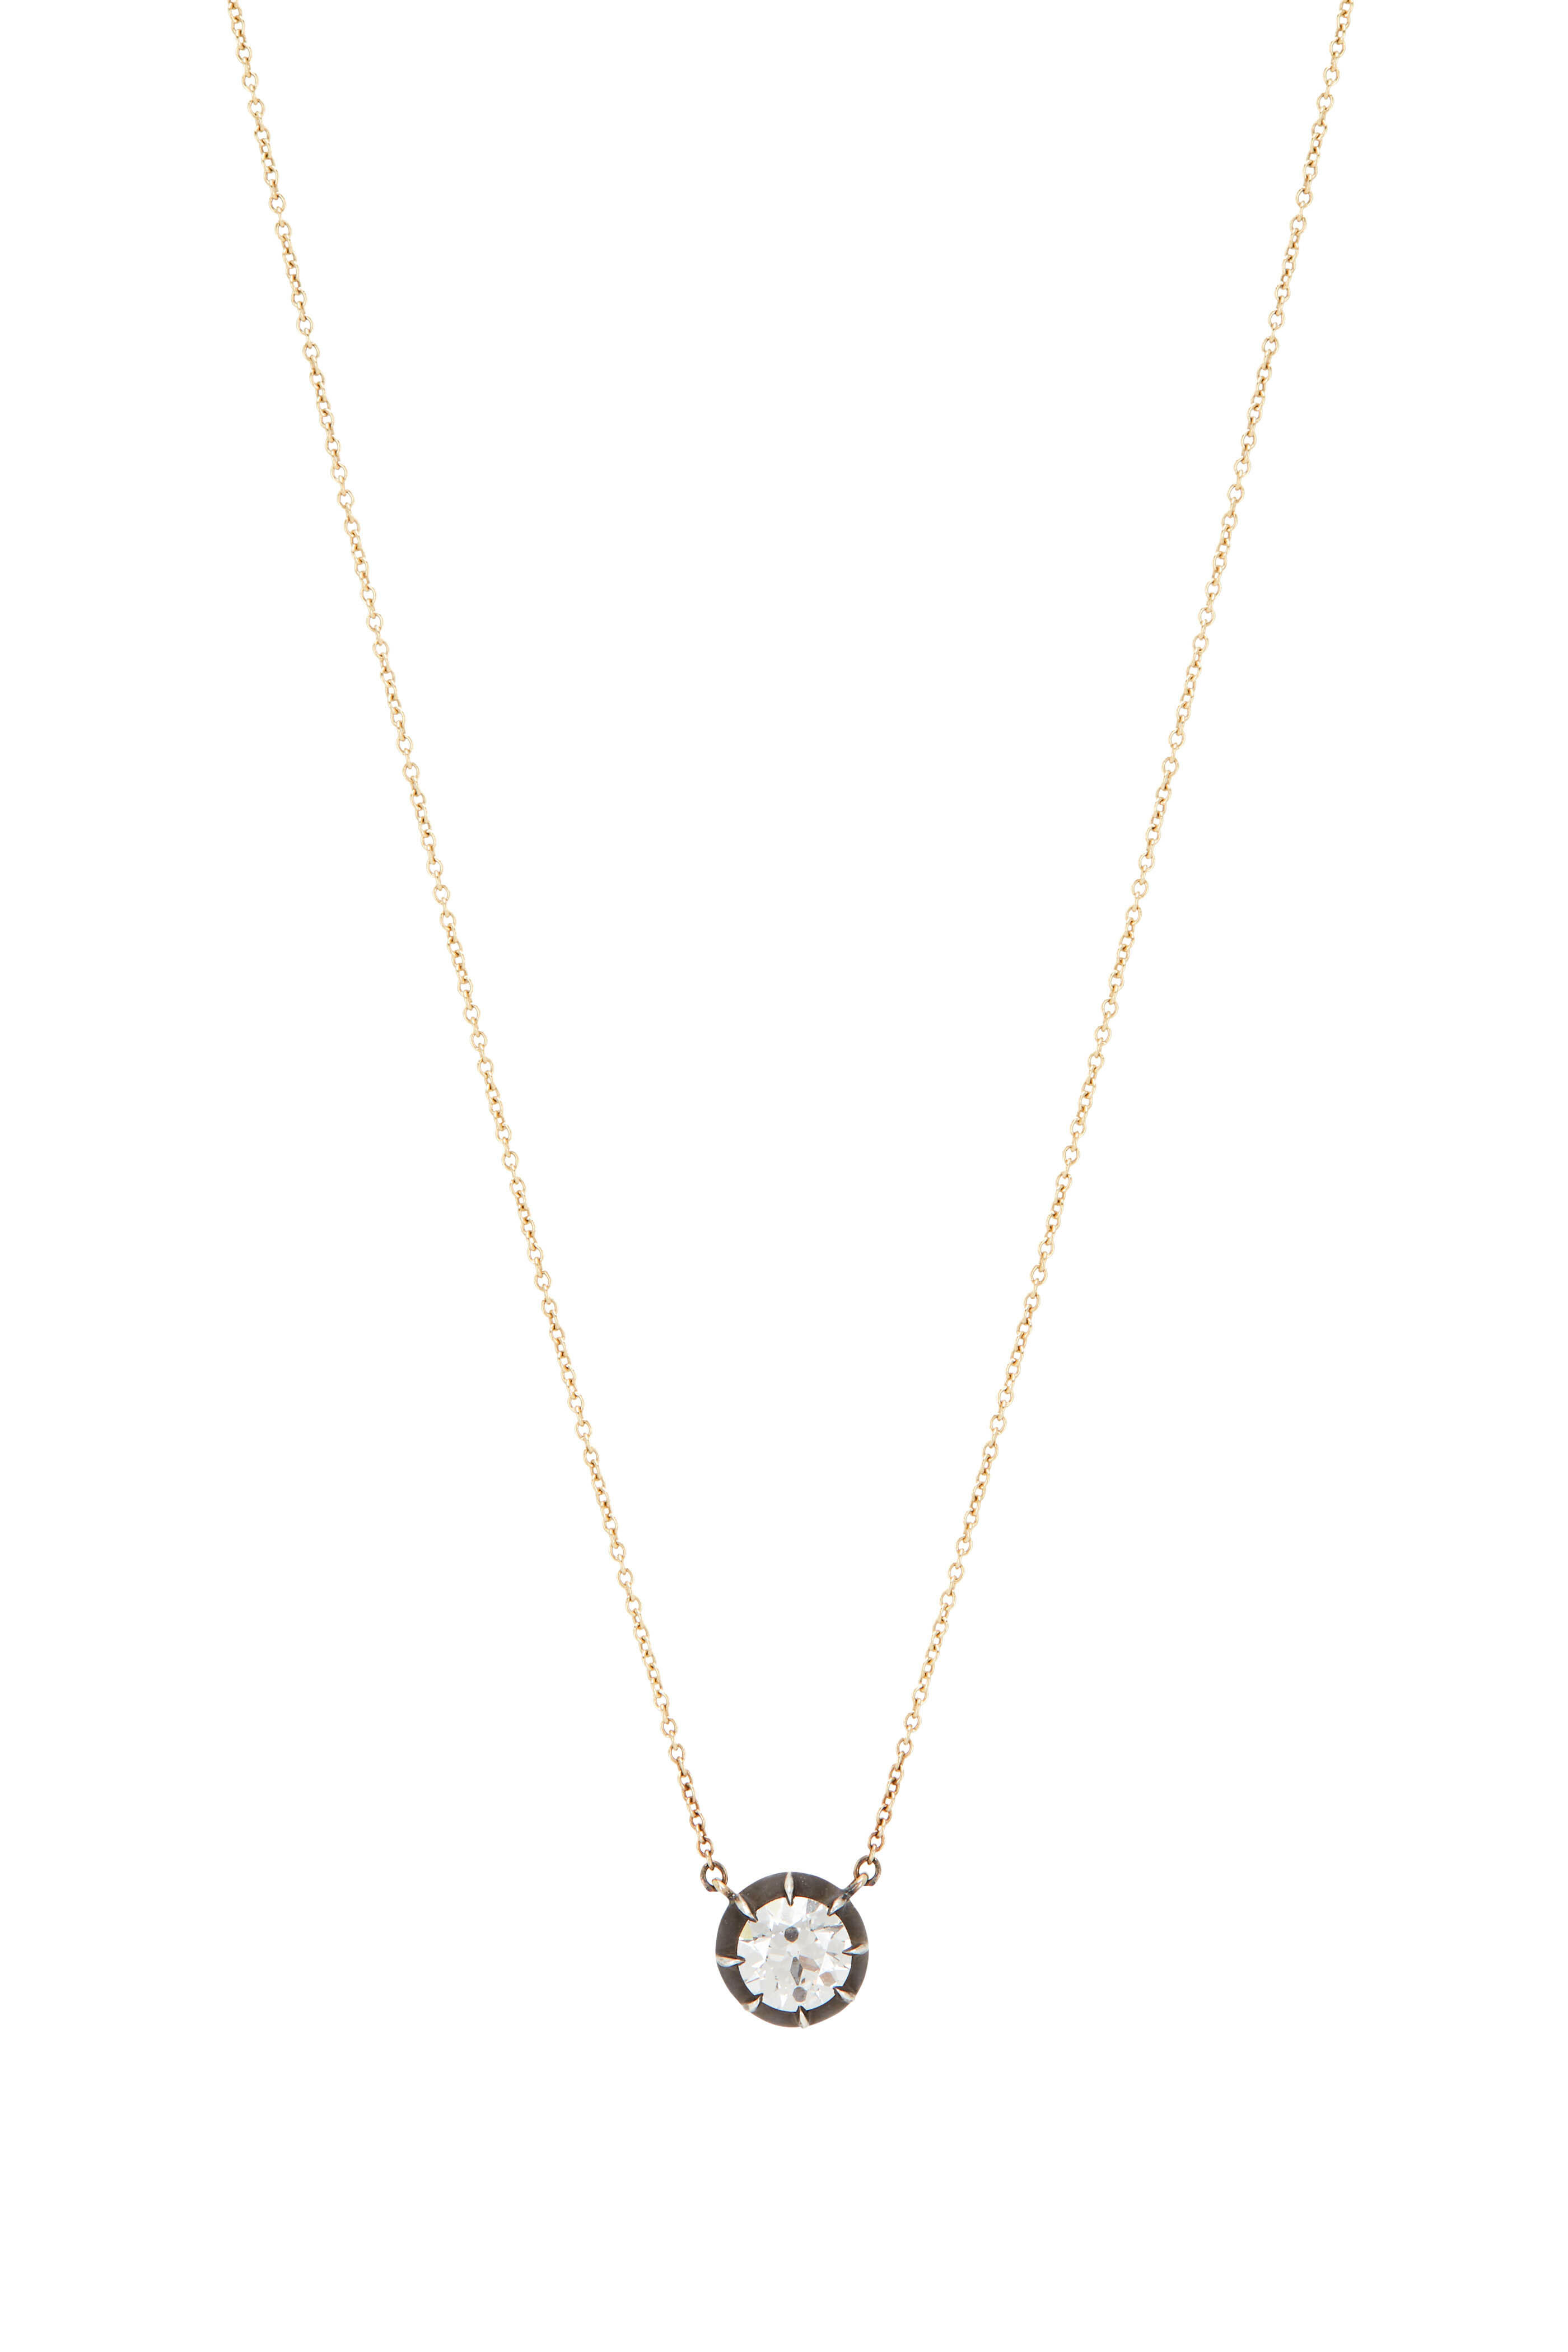 Fred Leighton - Solitaire Diamond Pendant Necklace